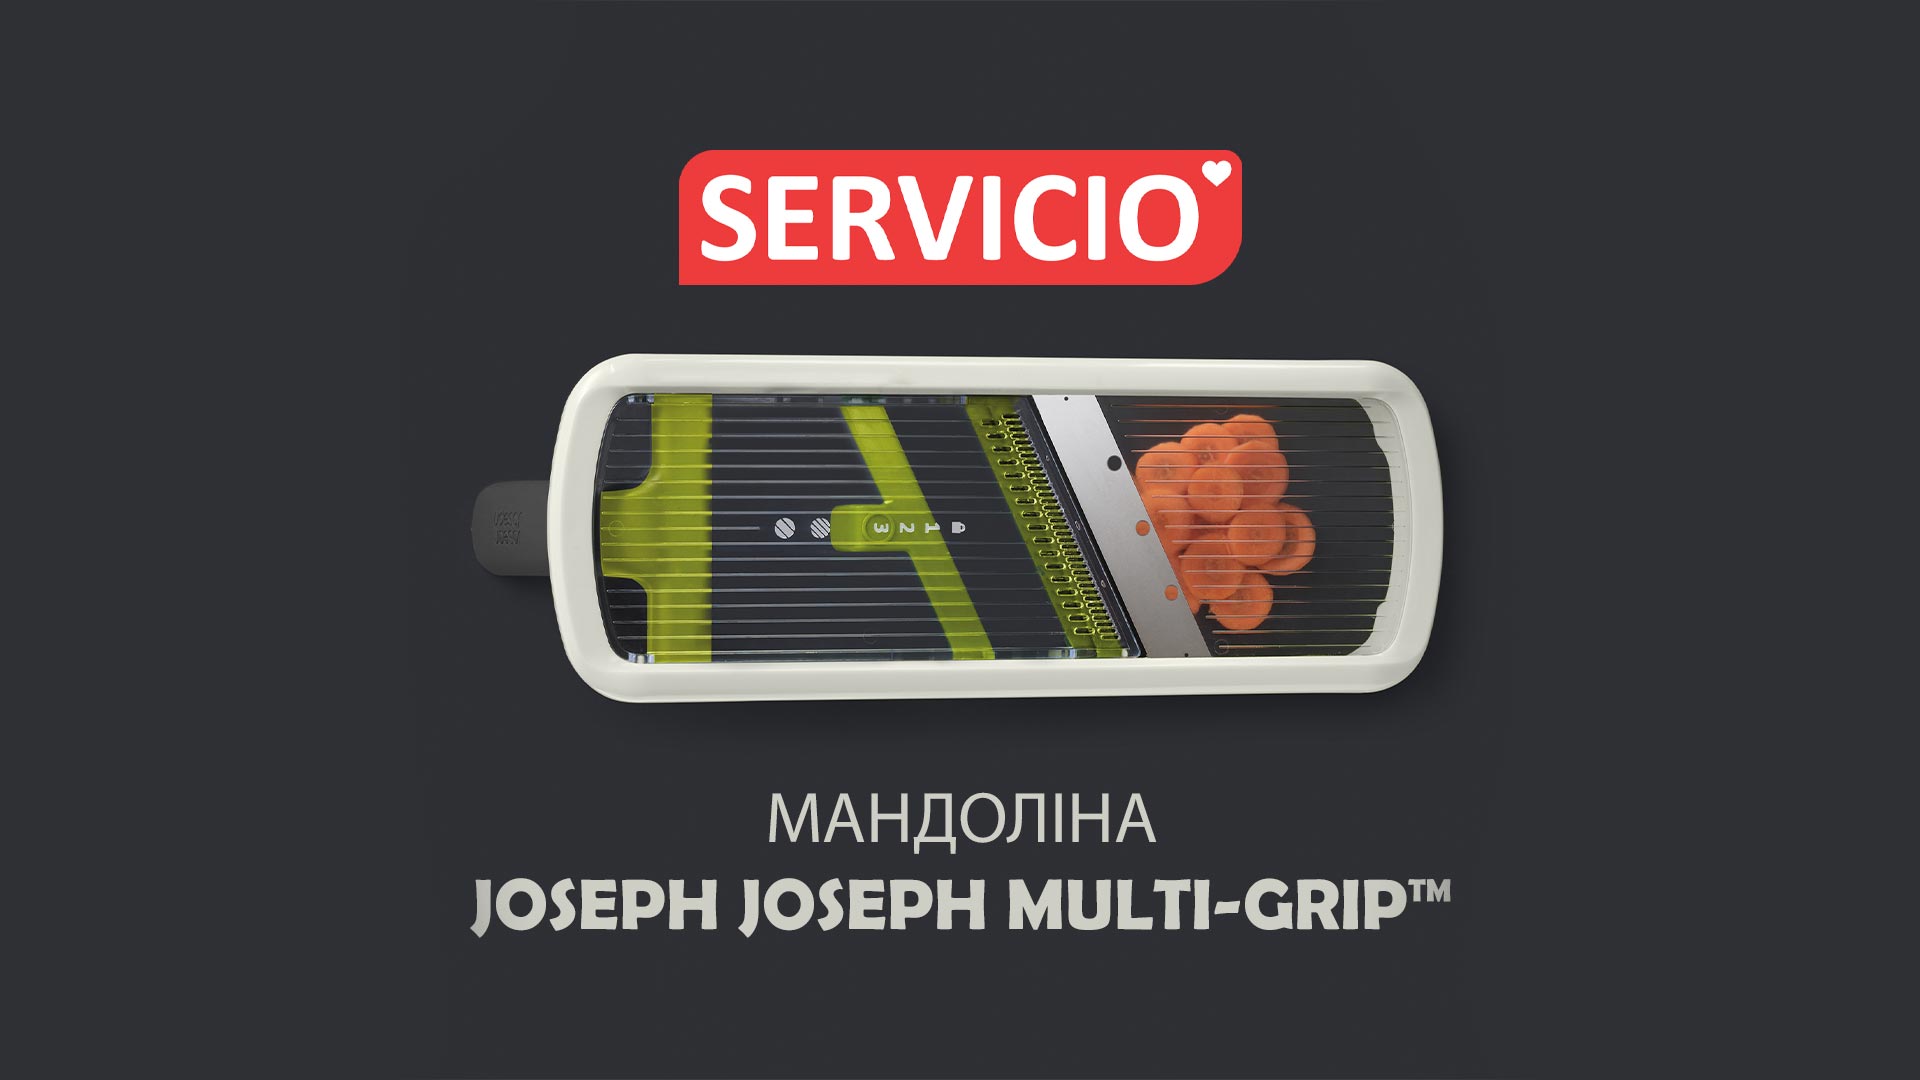 Joseph Joseph Multi-Grip